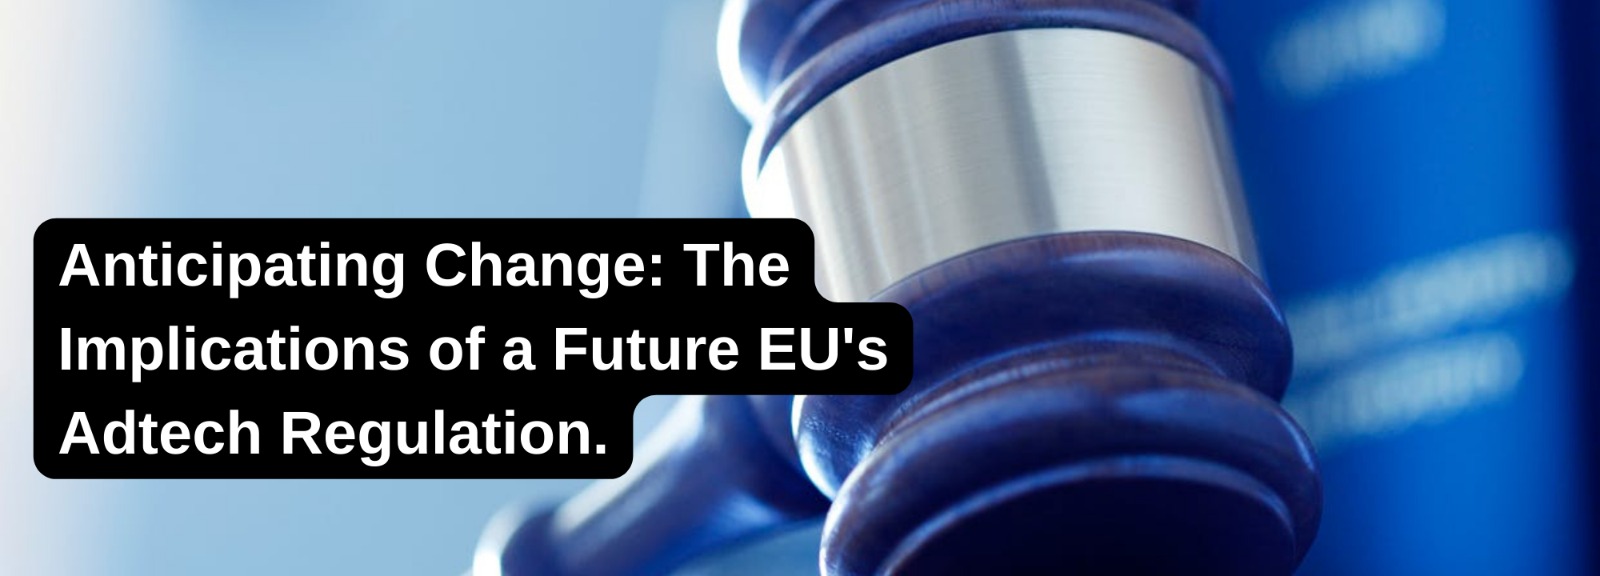 Anticipating Change: The Implications of a future EU's Adtech Regulation.